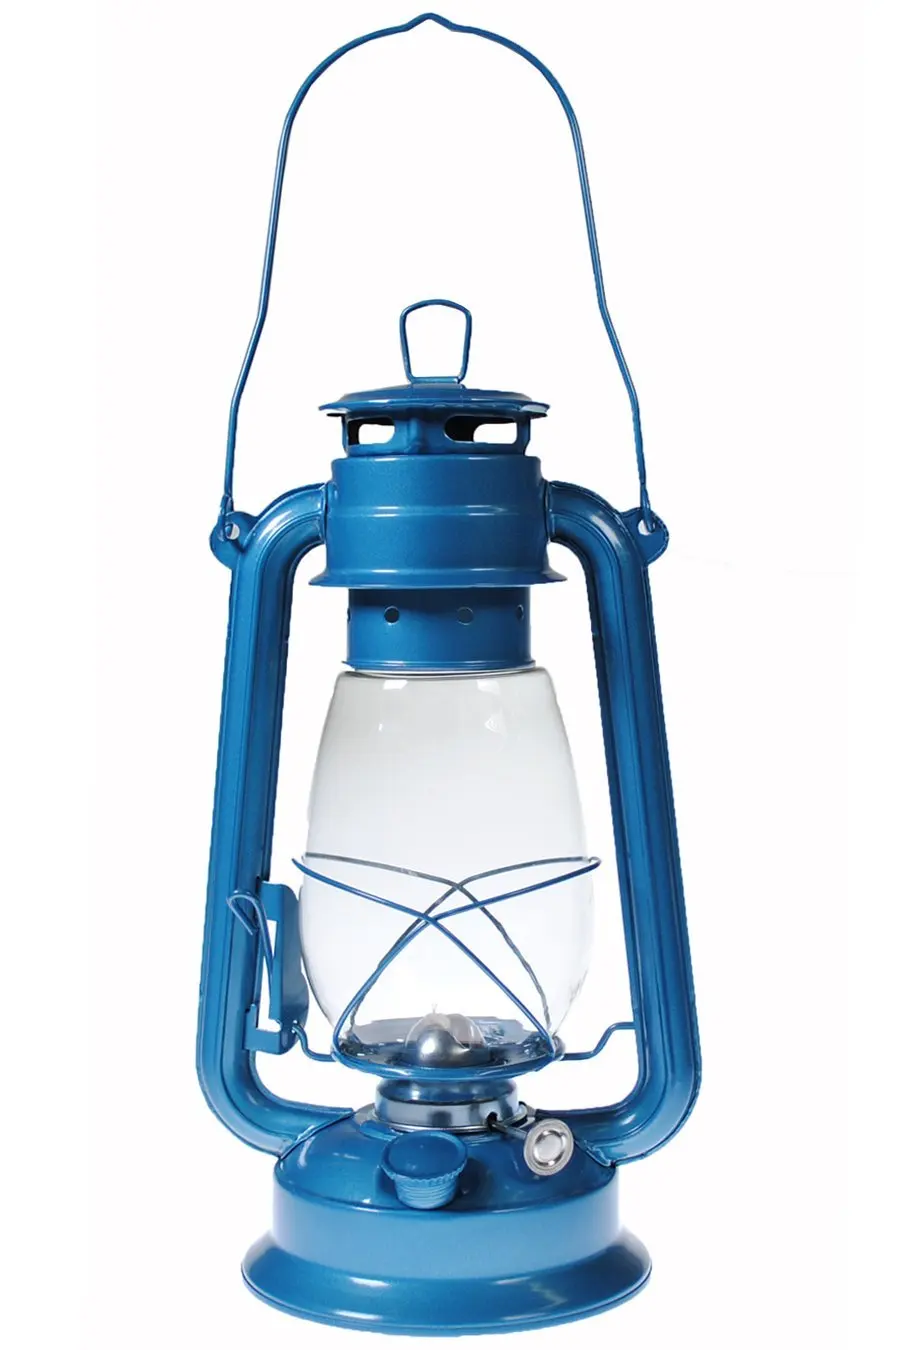 

Kerosene Oil Lantern Emergency Hanging Light Lamp - BLUE 12 Inches For Camping Hiking Outdoor Emergency Preparedness